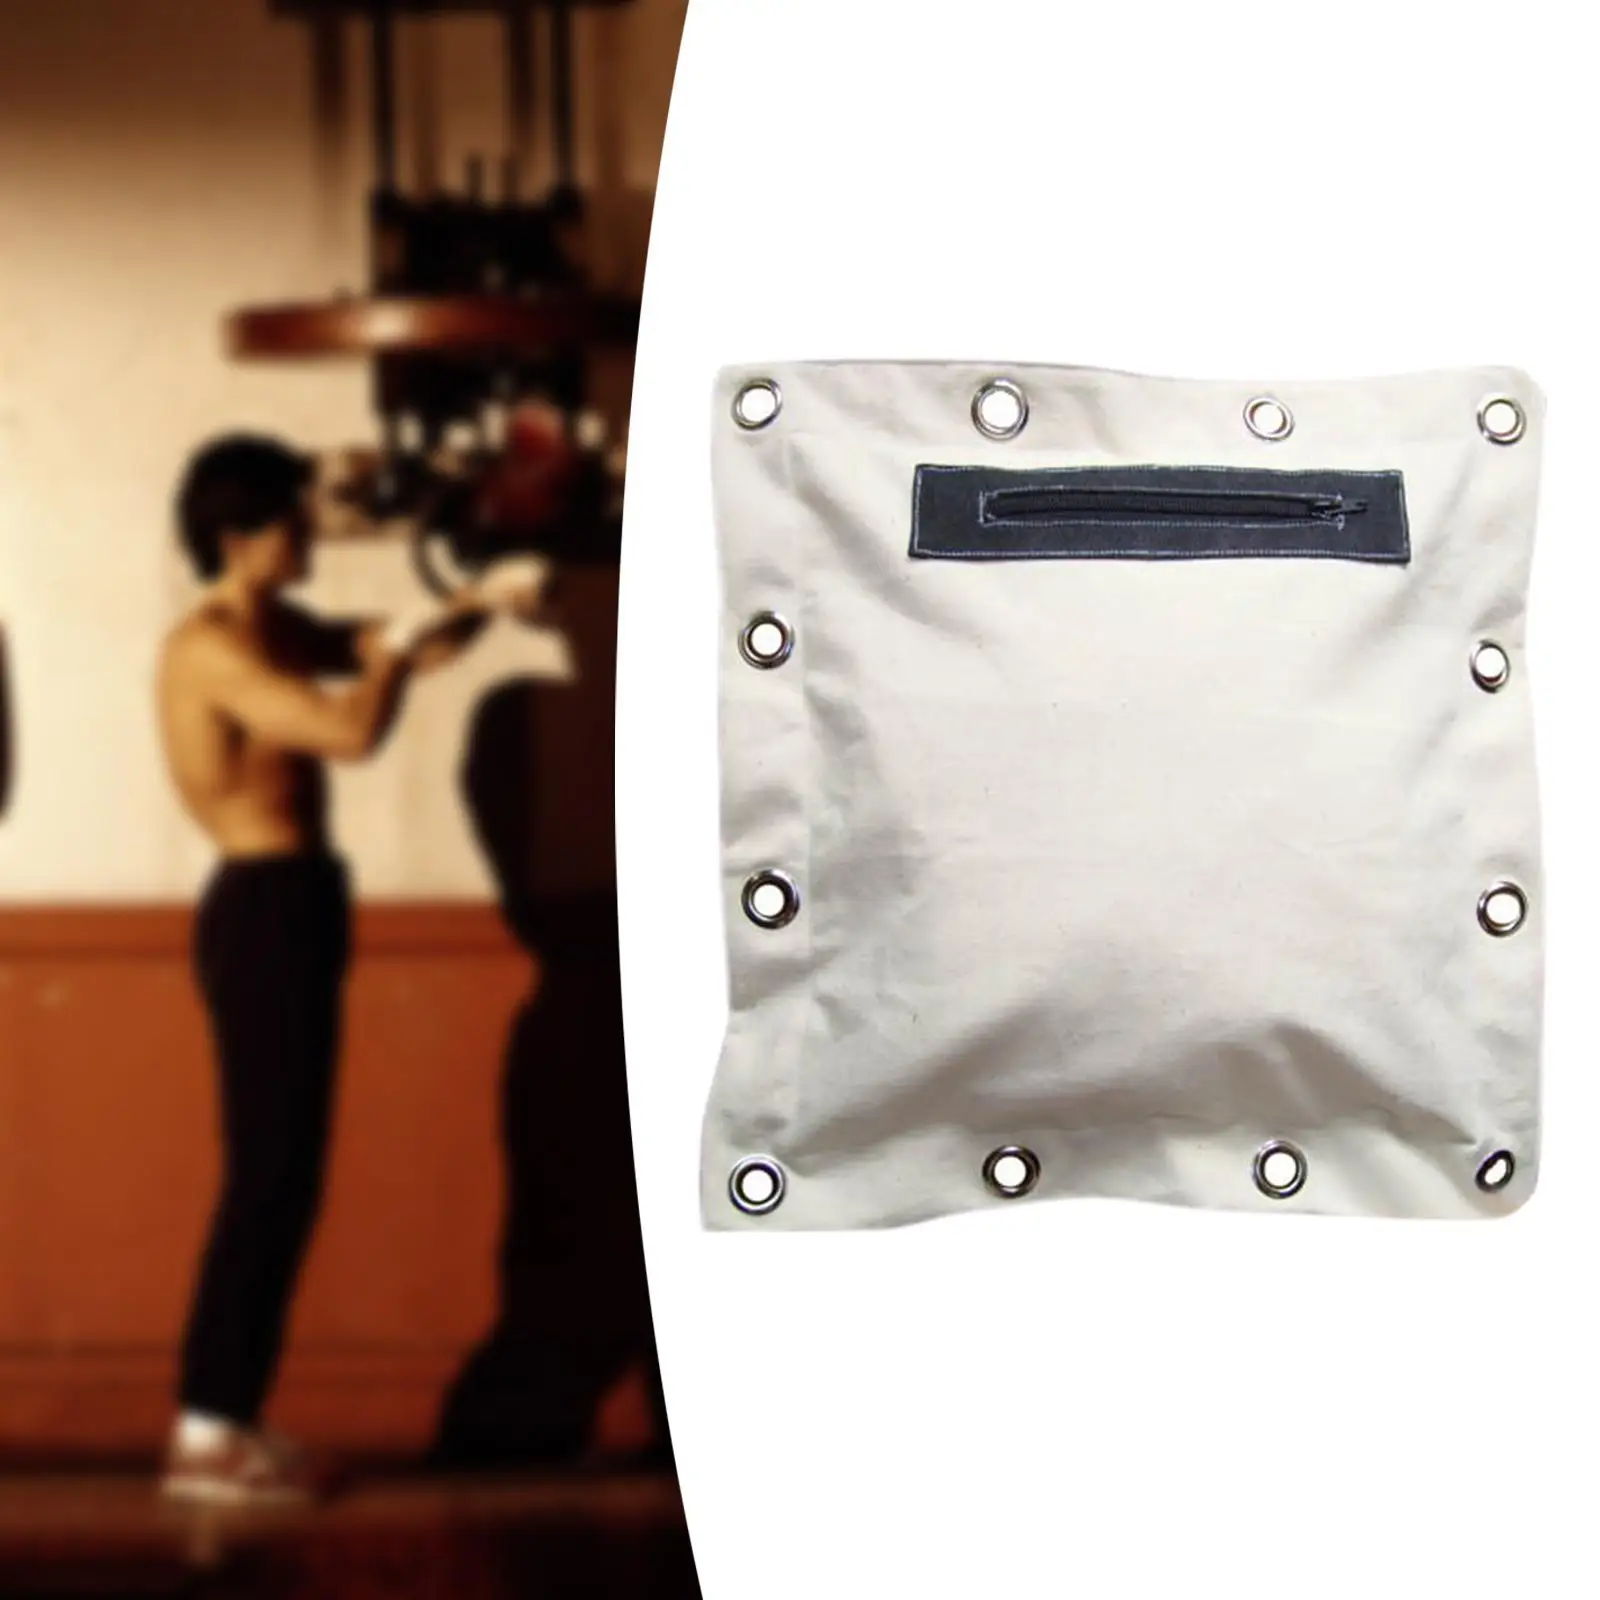 Canvas Wall Bags Wing Chun Wall Bags Wall Sandbag Punch Sand Bag for Outdoor Indoor